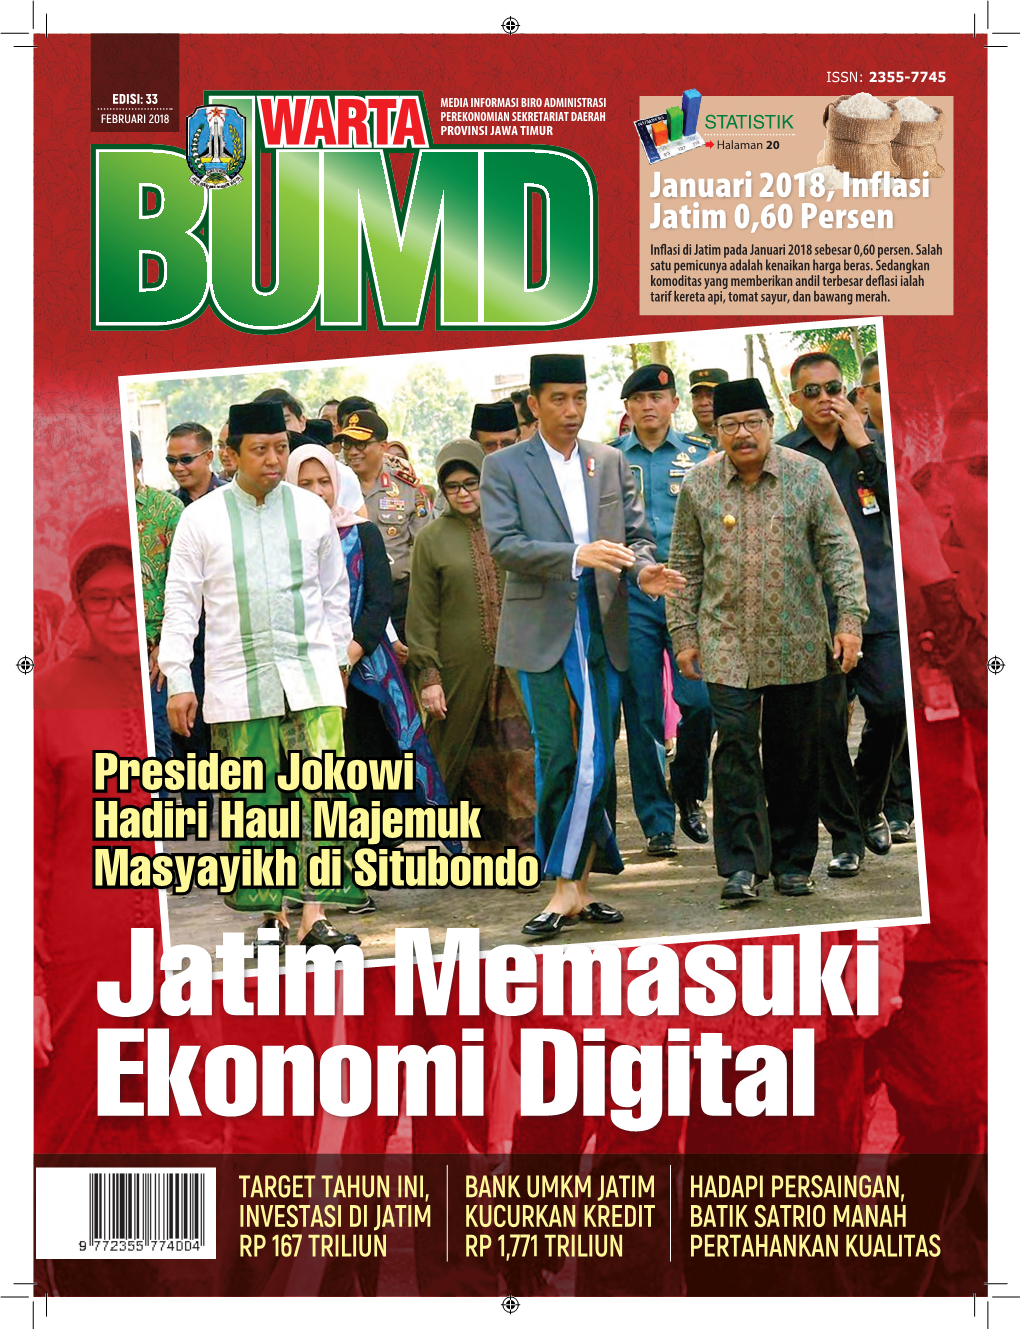 Presiden Jokowi Hadiri Haul Majemuk Masyayikh Di Situbondo